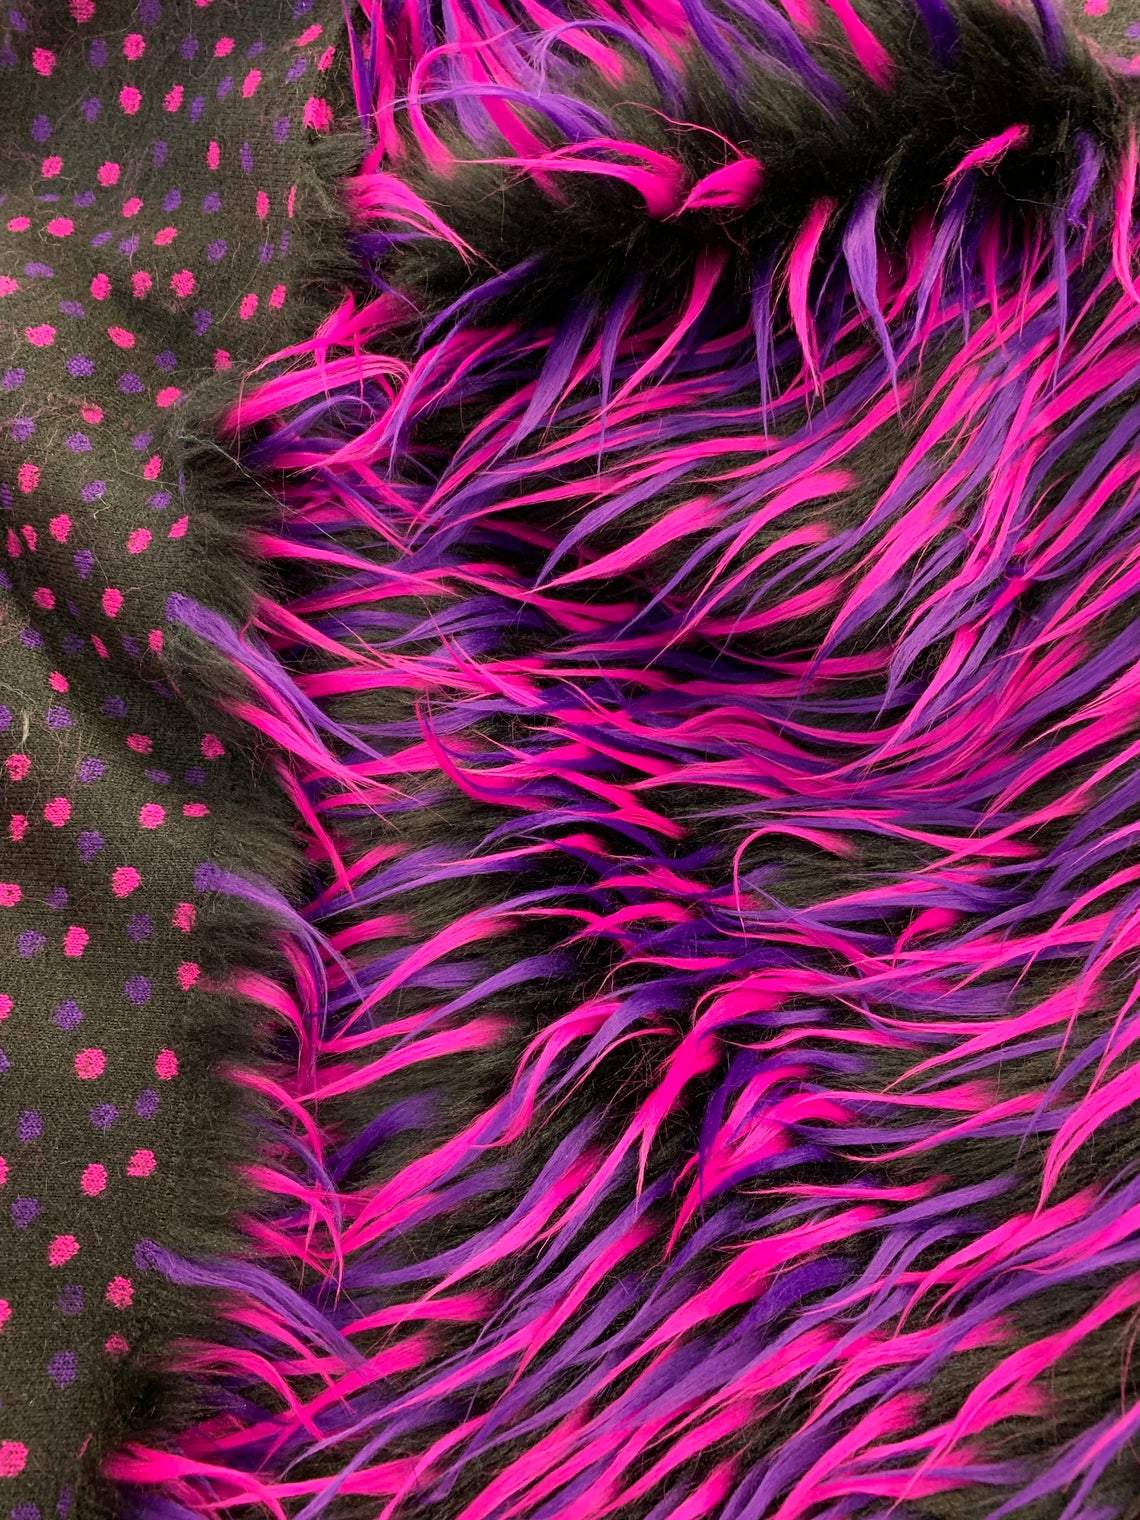 Fuchsia, Purple, and Black Faux Fur Fabric By The Yard 3 Tone Fashion Fabric MaterialICE FABRICSICE FABRICSFuchsia, Purple, and Black Faux Fur Fabric By The Yard 3 Tone Fashion Fabric Material ICE FABRICS